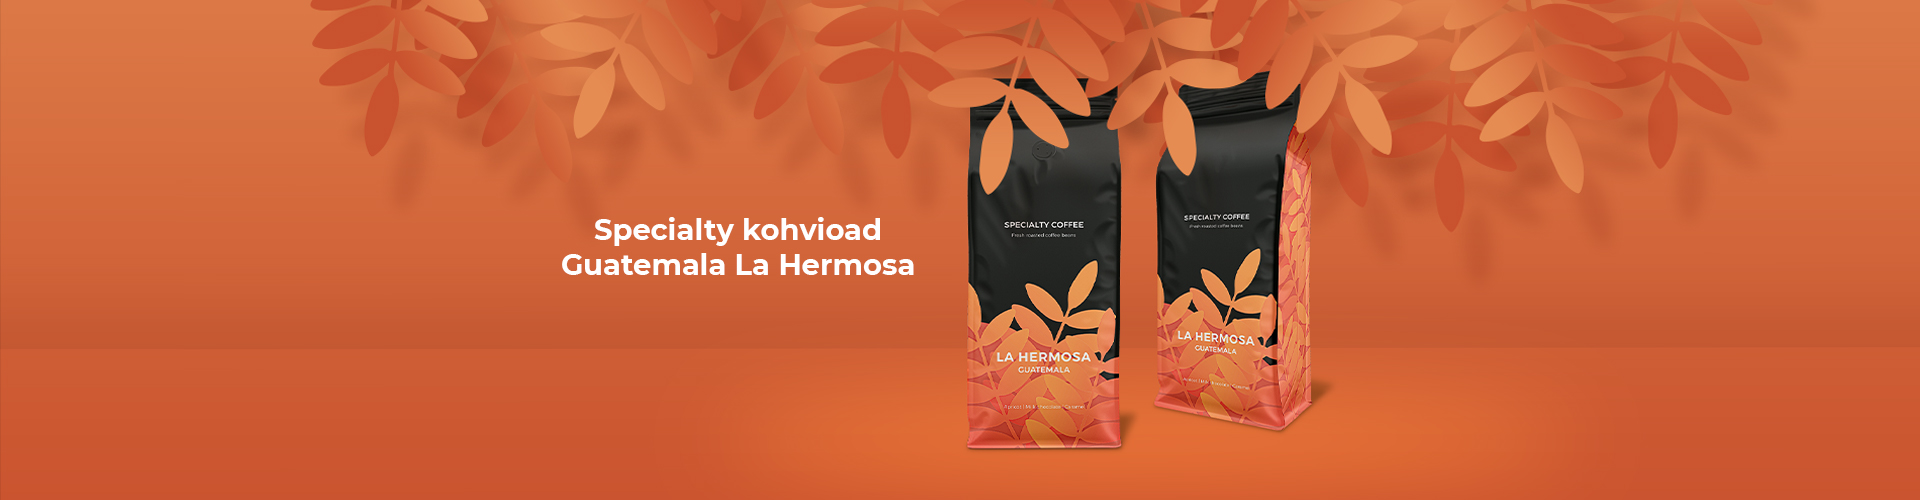 Guatemala La Hermosa specialty kohvioad